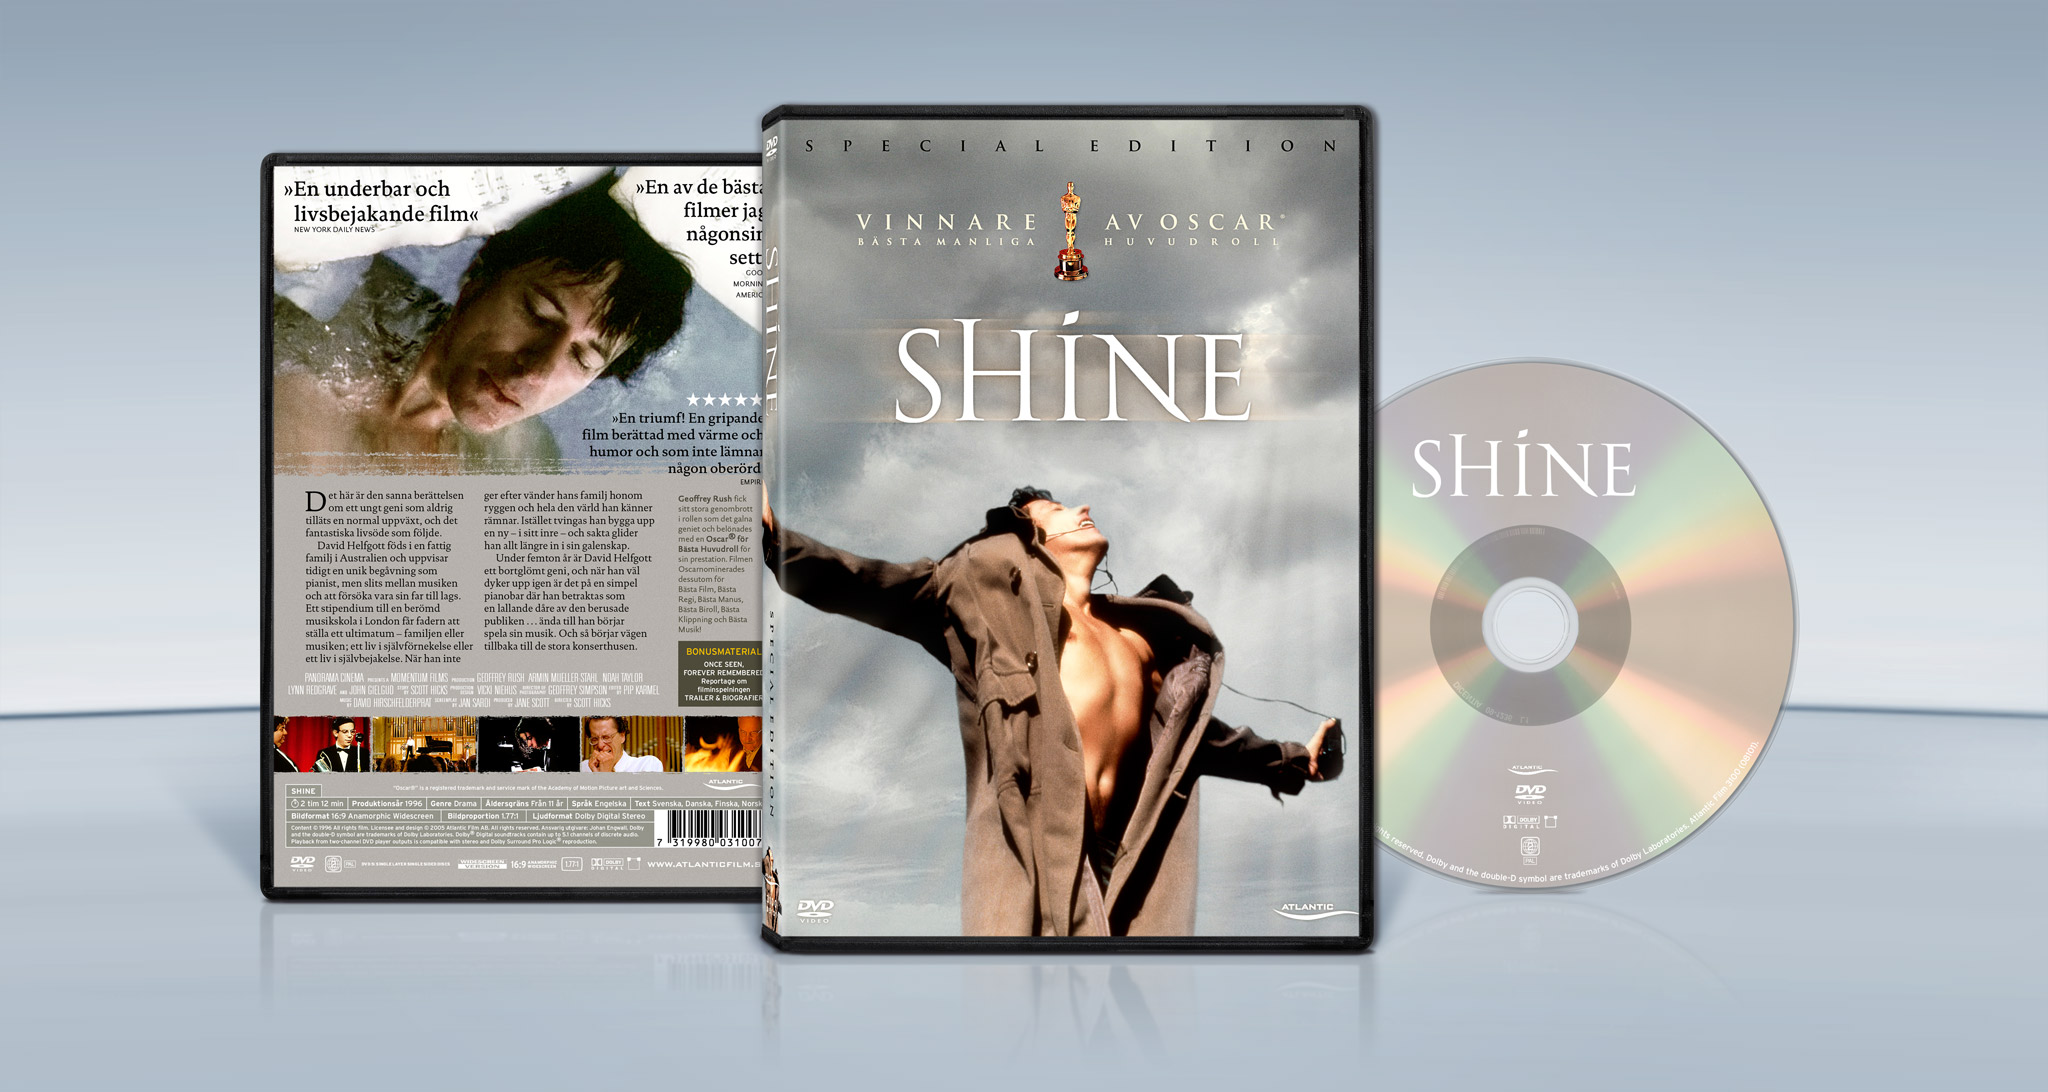 Shiny films. Shine 1996.